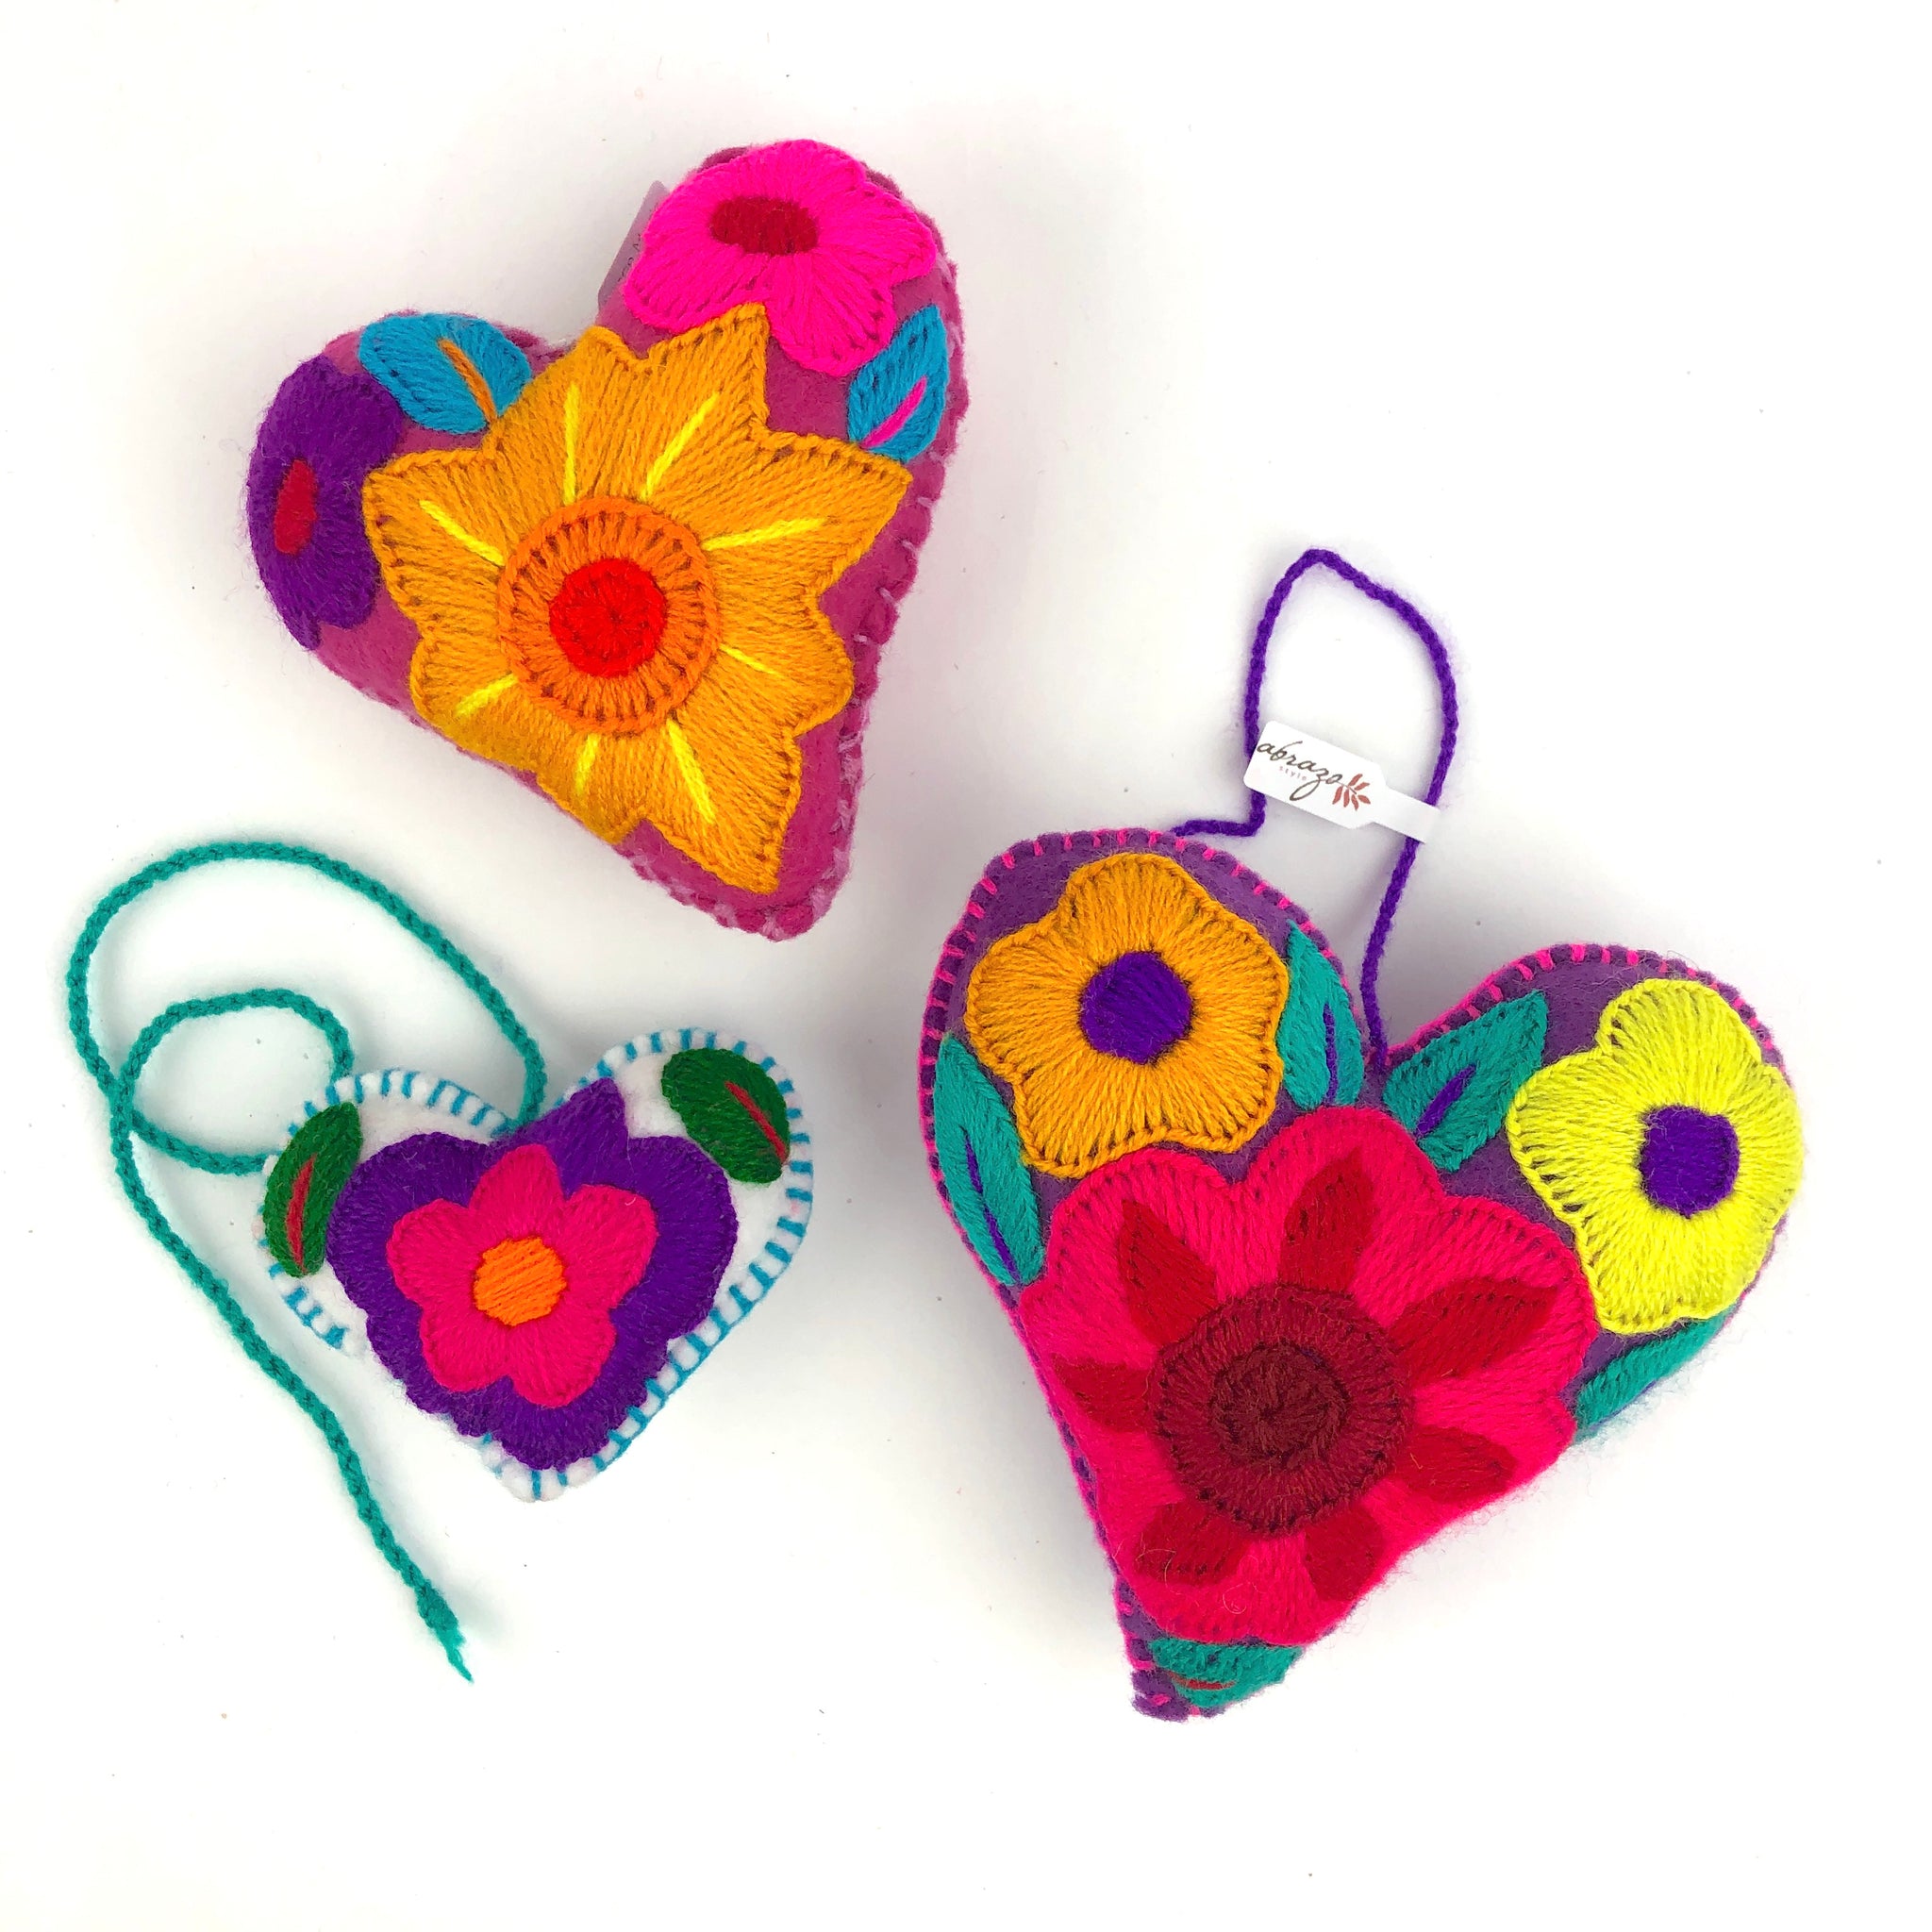 Embroidered heart, Mexican heart, felt heart, fair trade heart